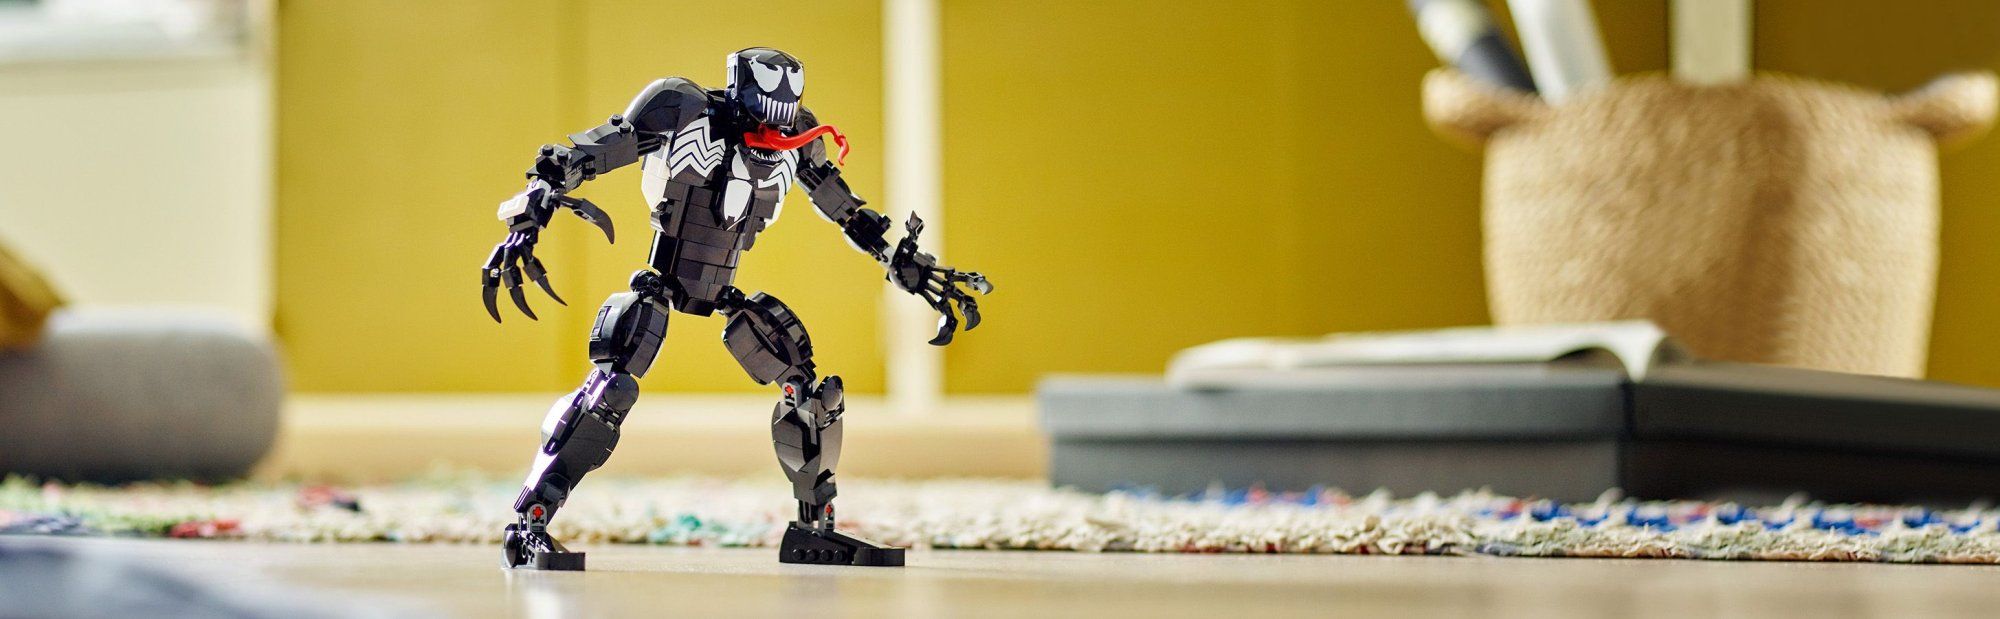 LEGO Marvel 76230 Venom – figurka